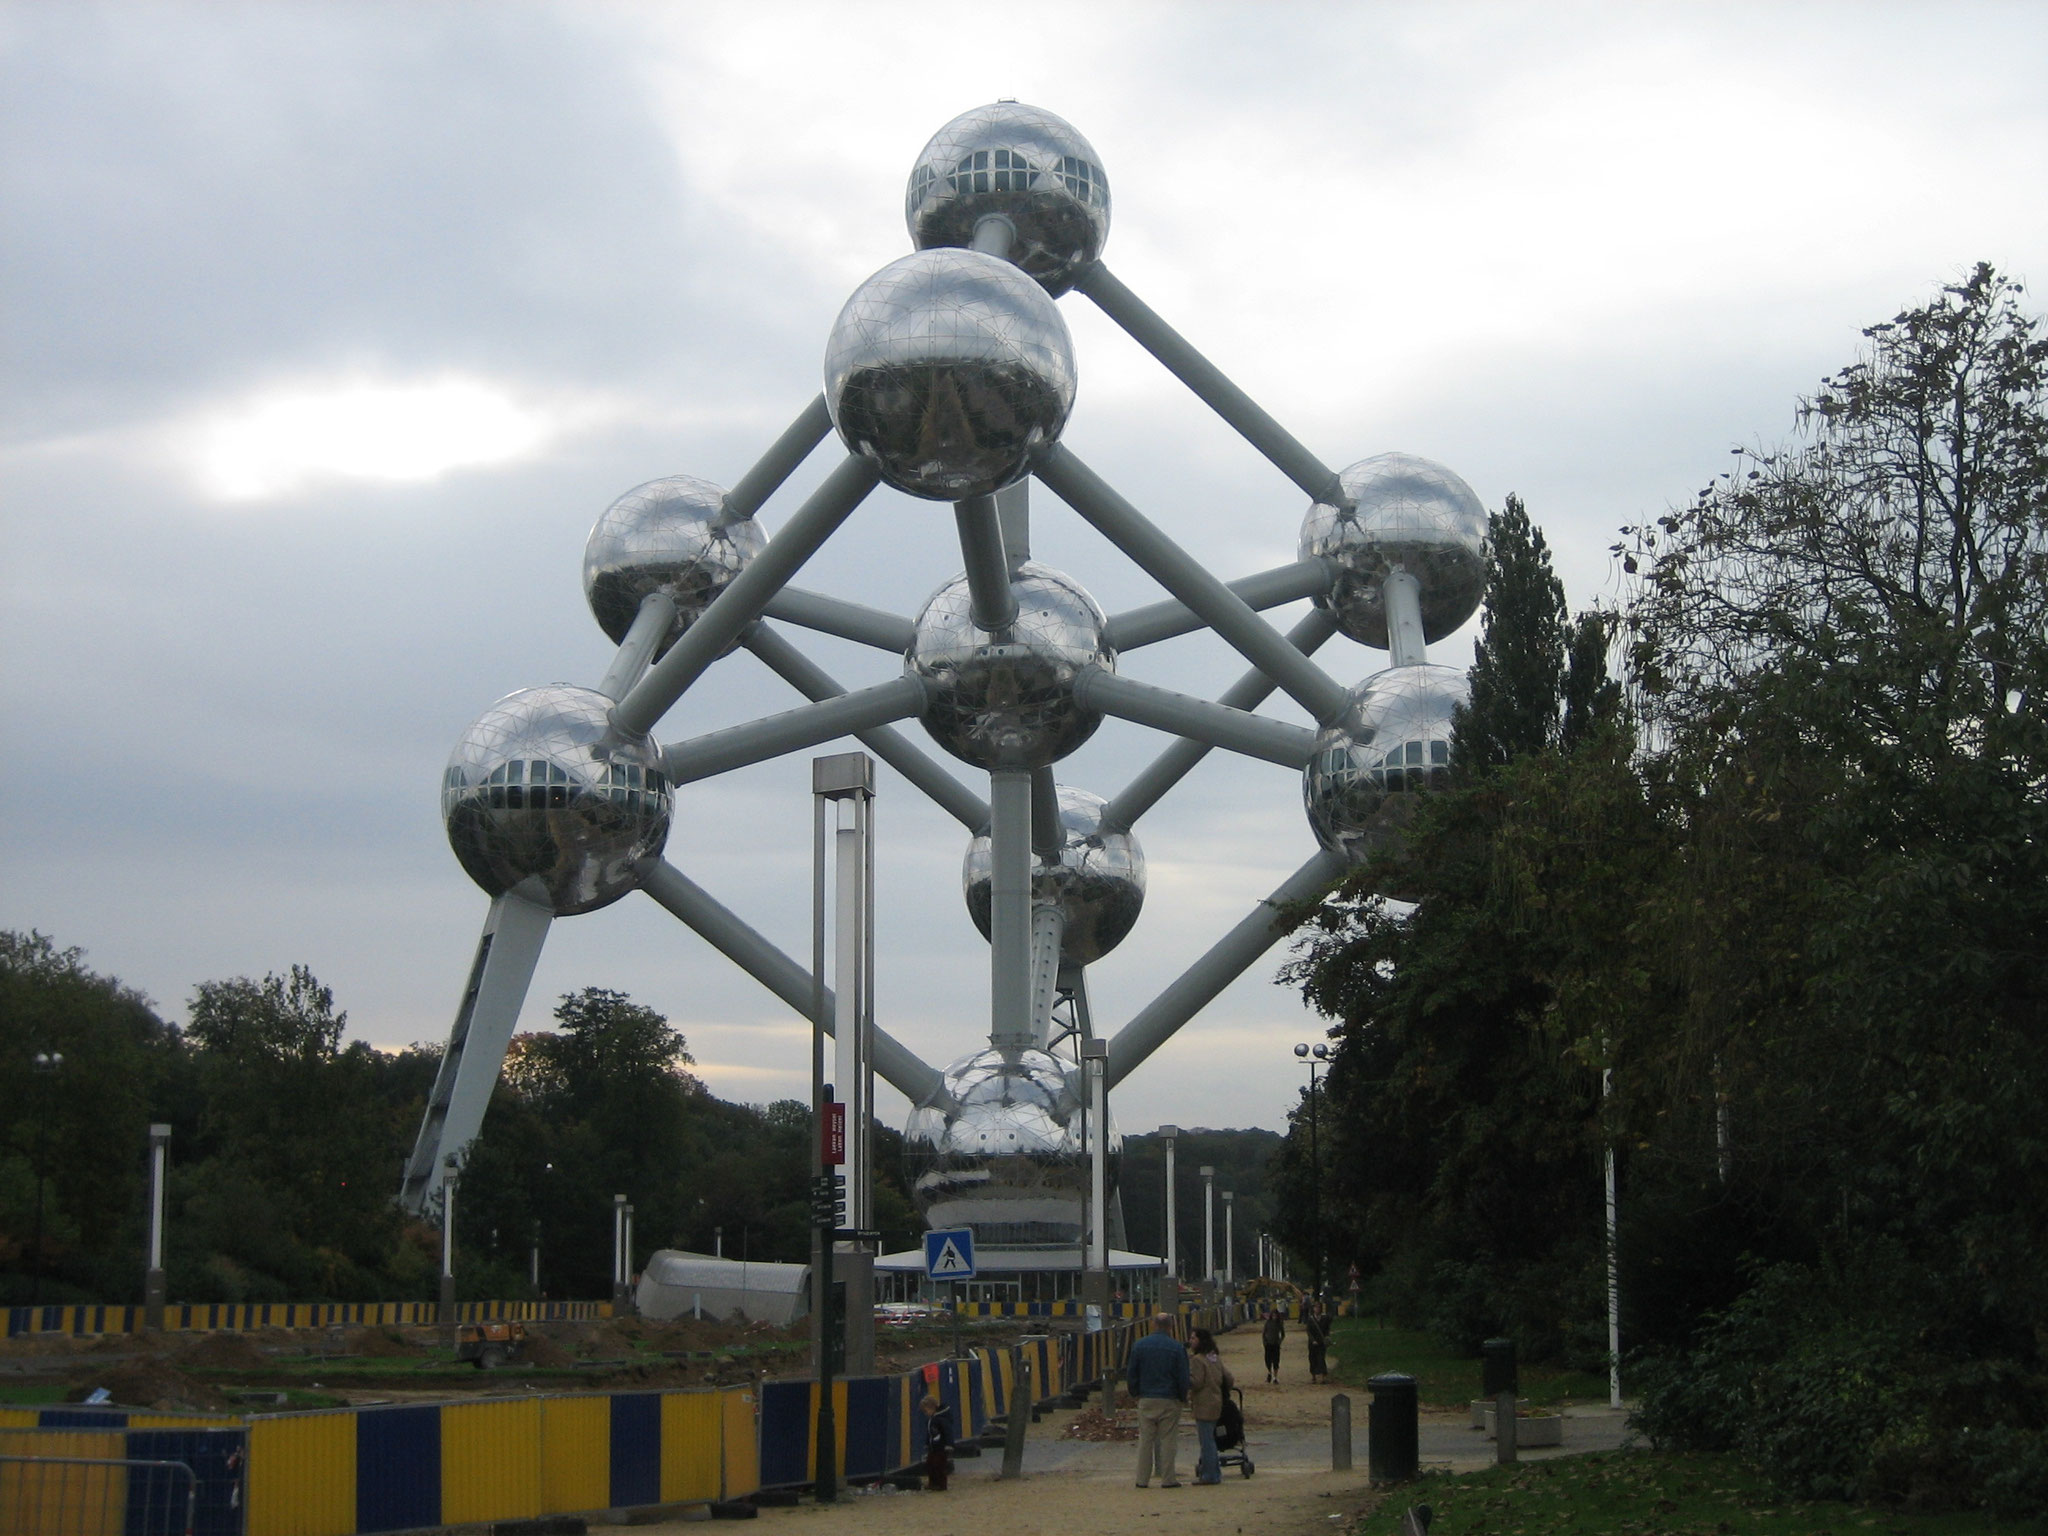 Atomium in Brussels - Russian seminar